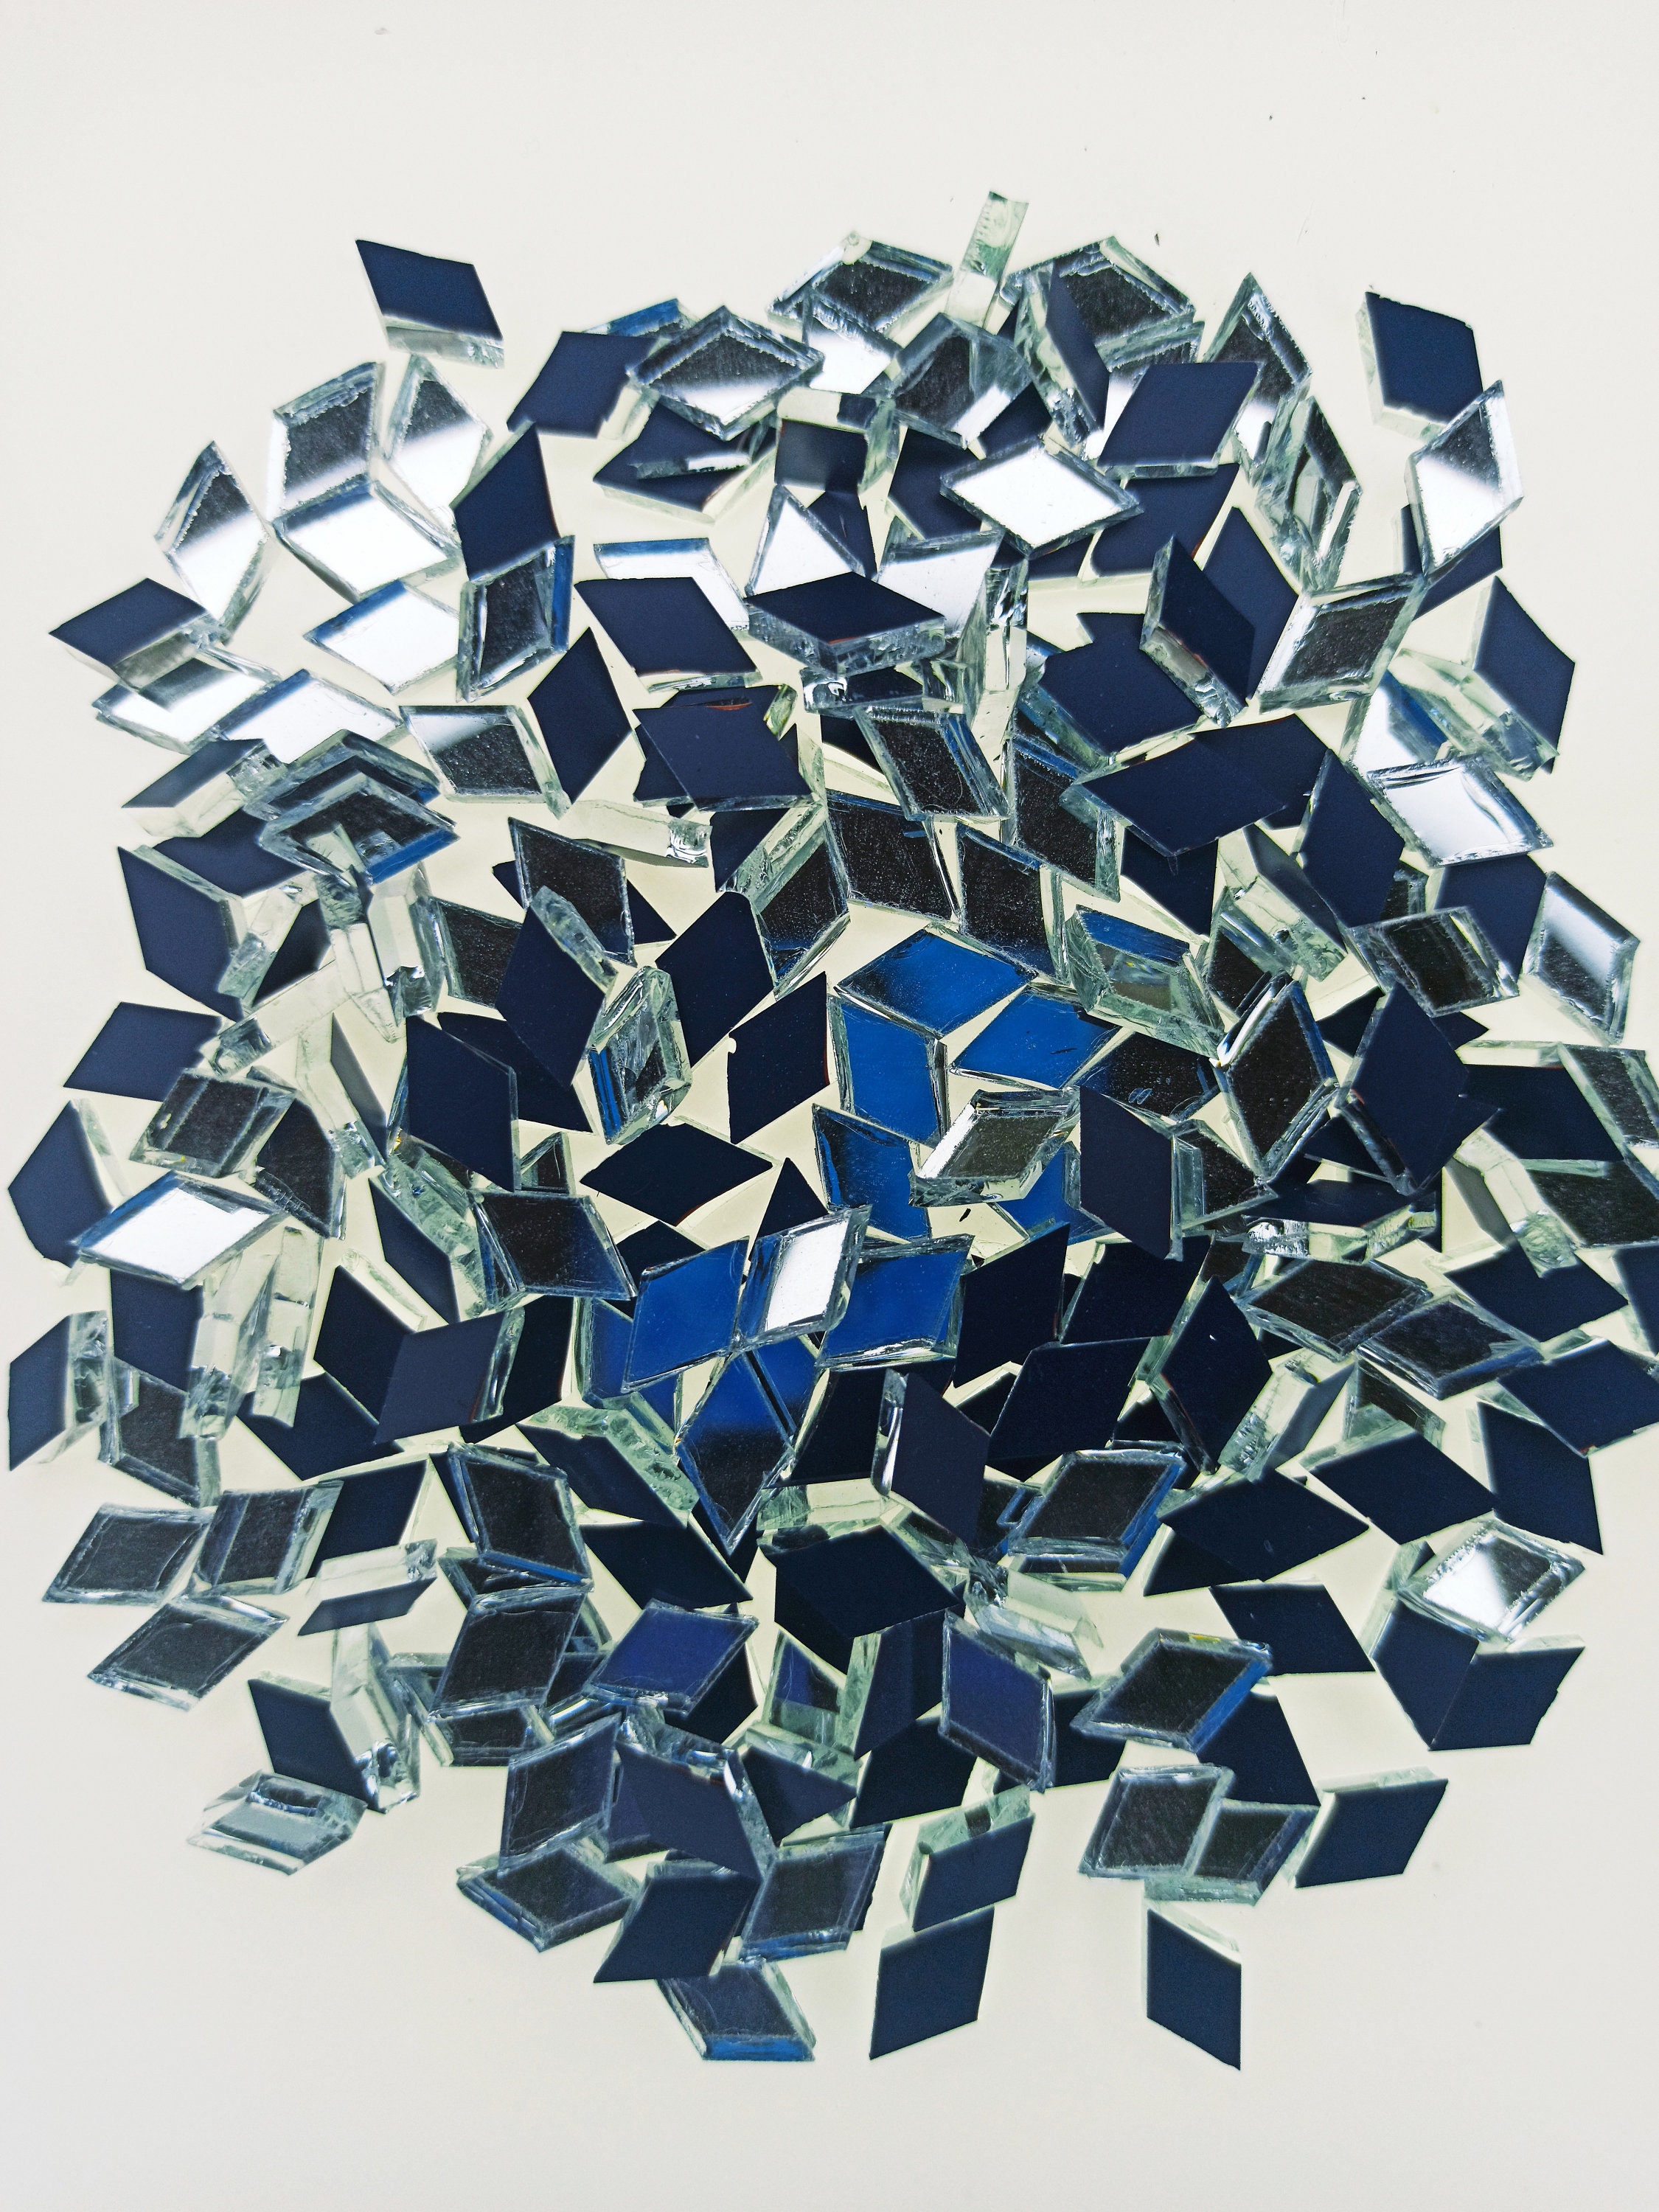 1x1cm Small Glass Square Craft Mirrors Bulk 200 Pieces Mosaic